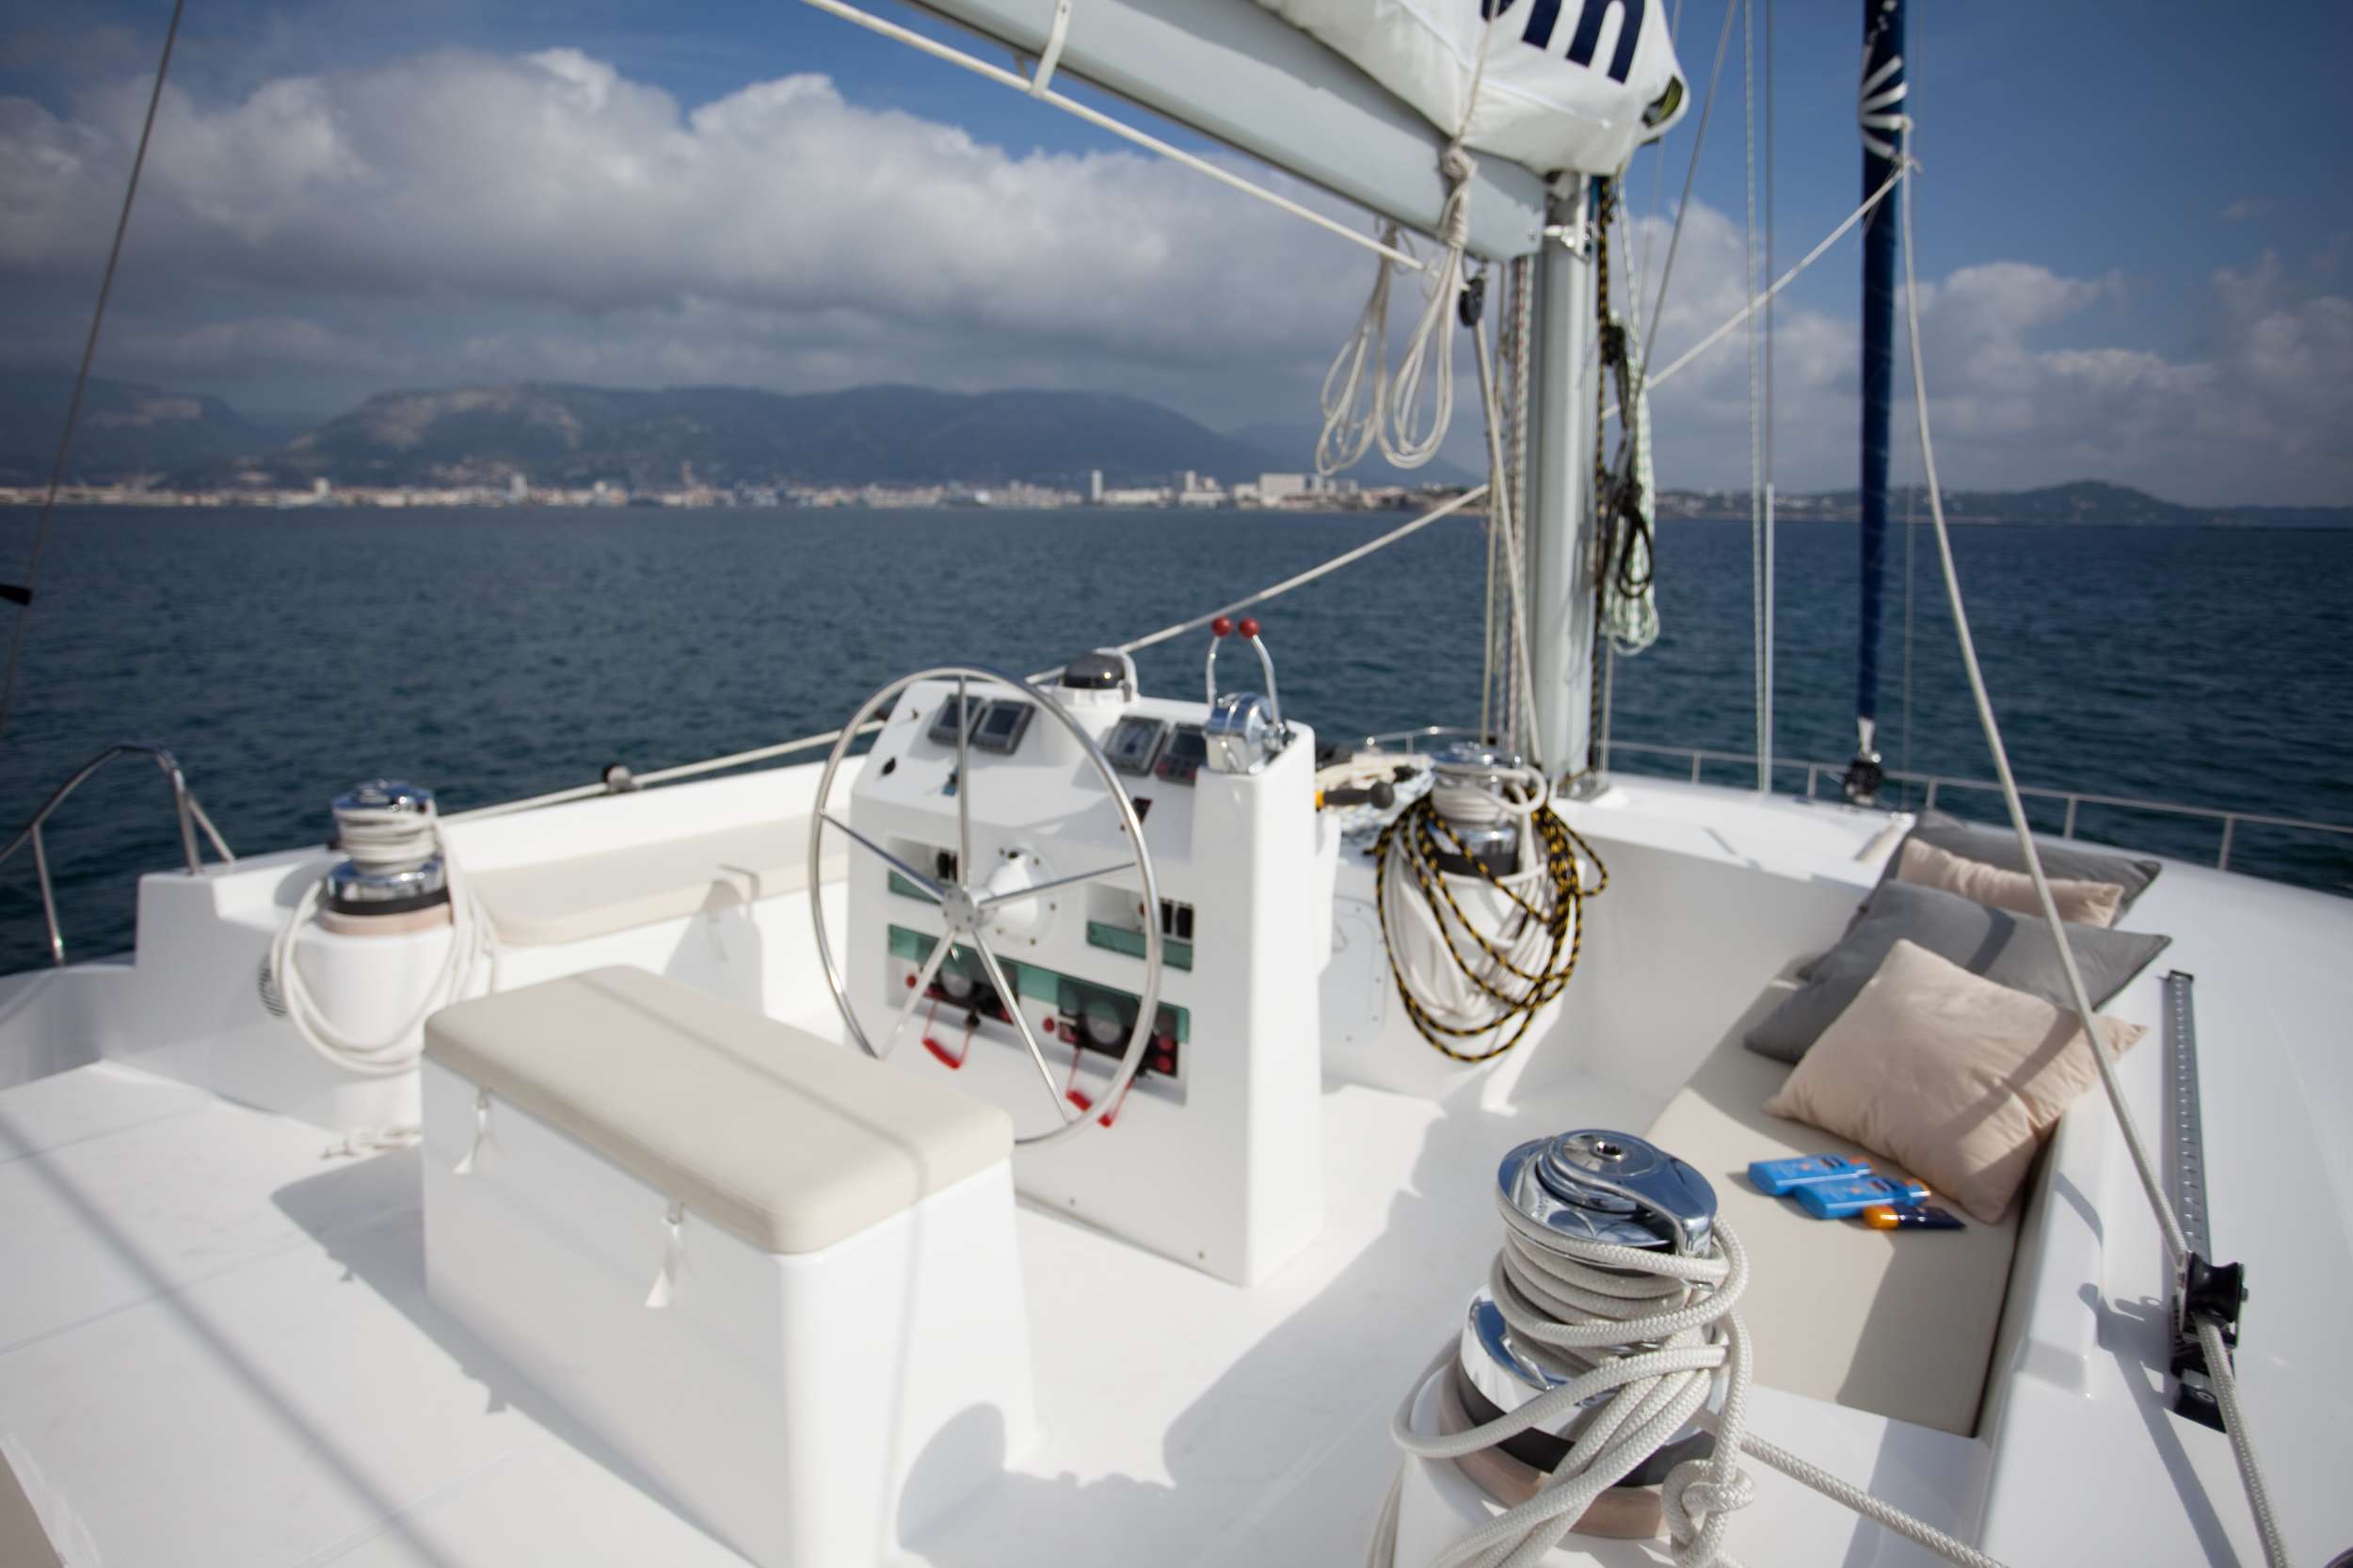 Dream 60 - Littr&eacute; &amp; Tauceti - Sailboat Charter Thailand & Boat hire in W. Med -Naples/Sicily, W. Med - Spain/Balearics, Croatia Bahamas, Indian Ocean and SE Asia 4